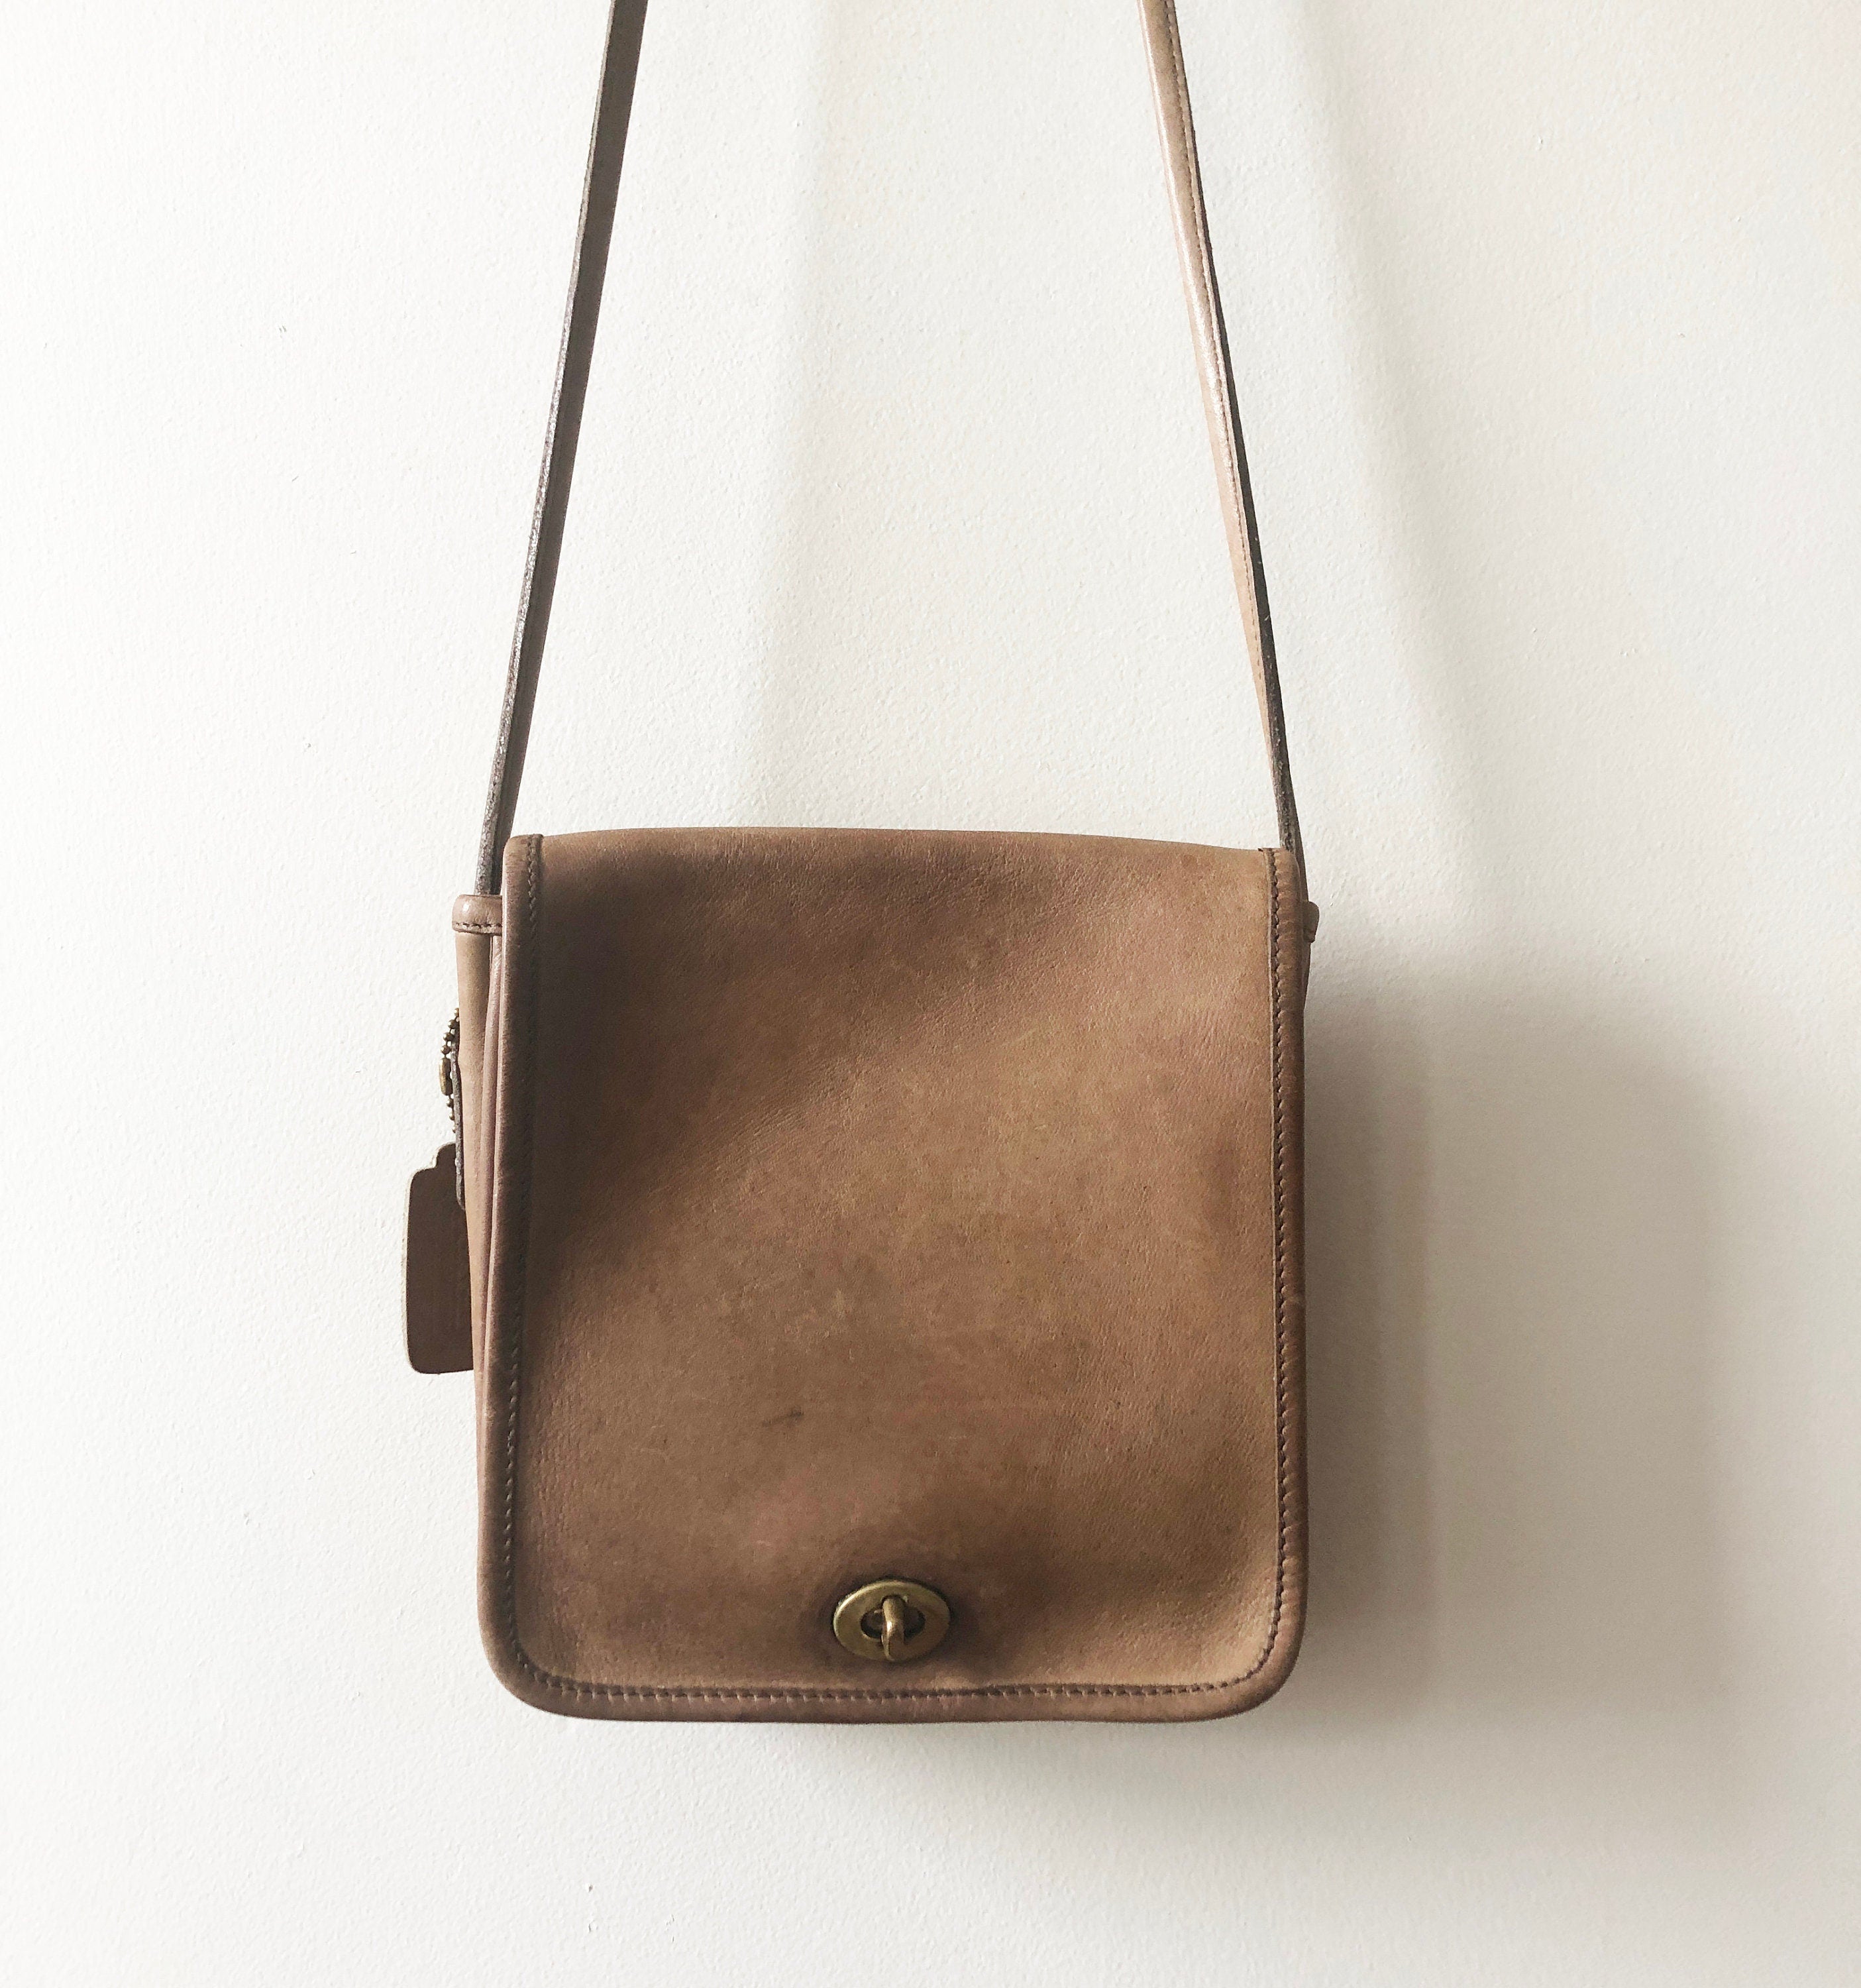 Coach Tan/beige Classic C print 17000 handbag With Brown Leather Trim.